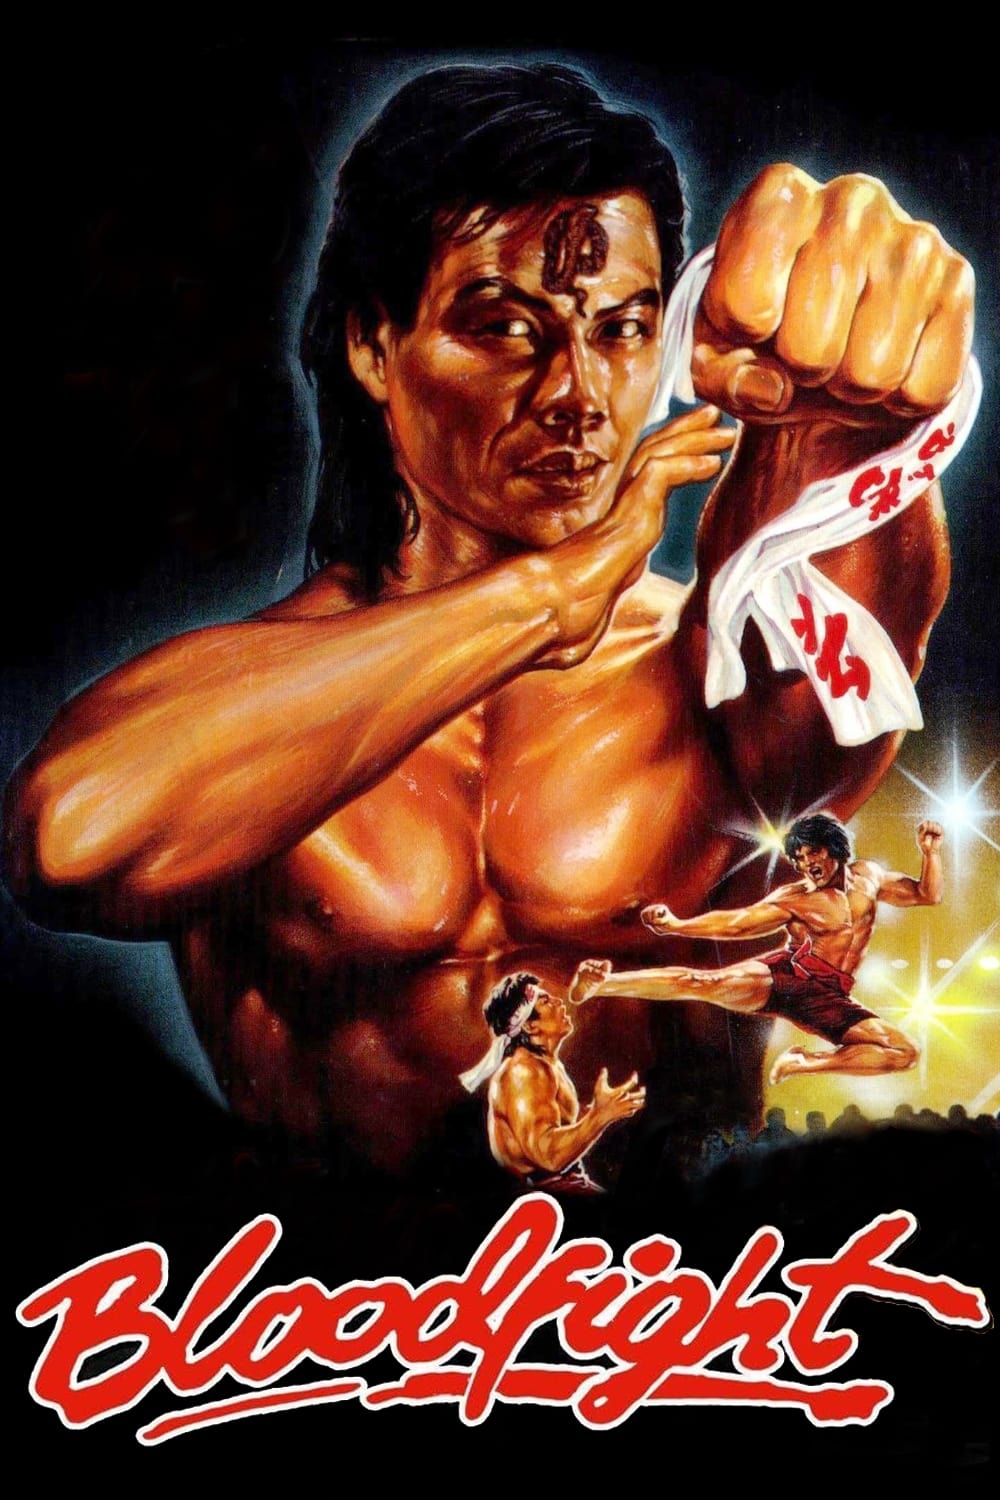 Bloodfight (1989)